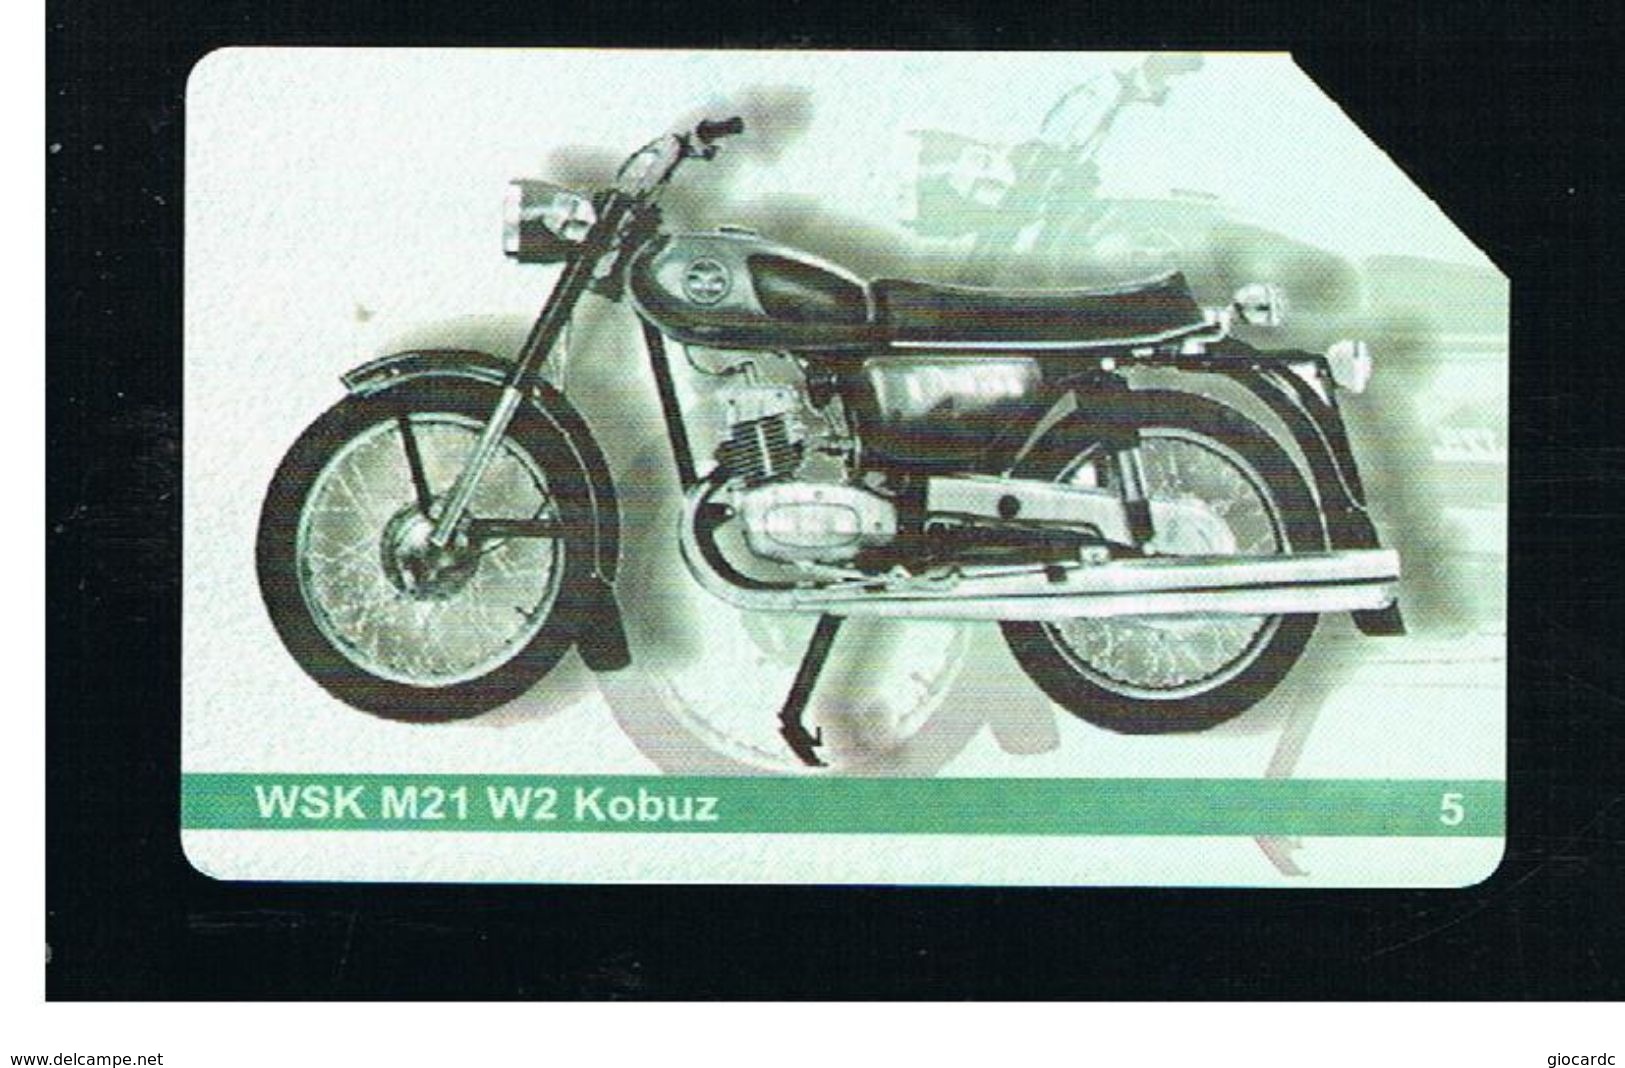 POLONIA (POLAND) - TP  - MOTO: WSK M21 W2 KOBUZ - USED - RIF. 10242 - Moto